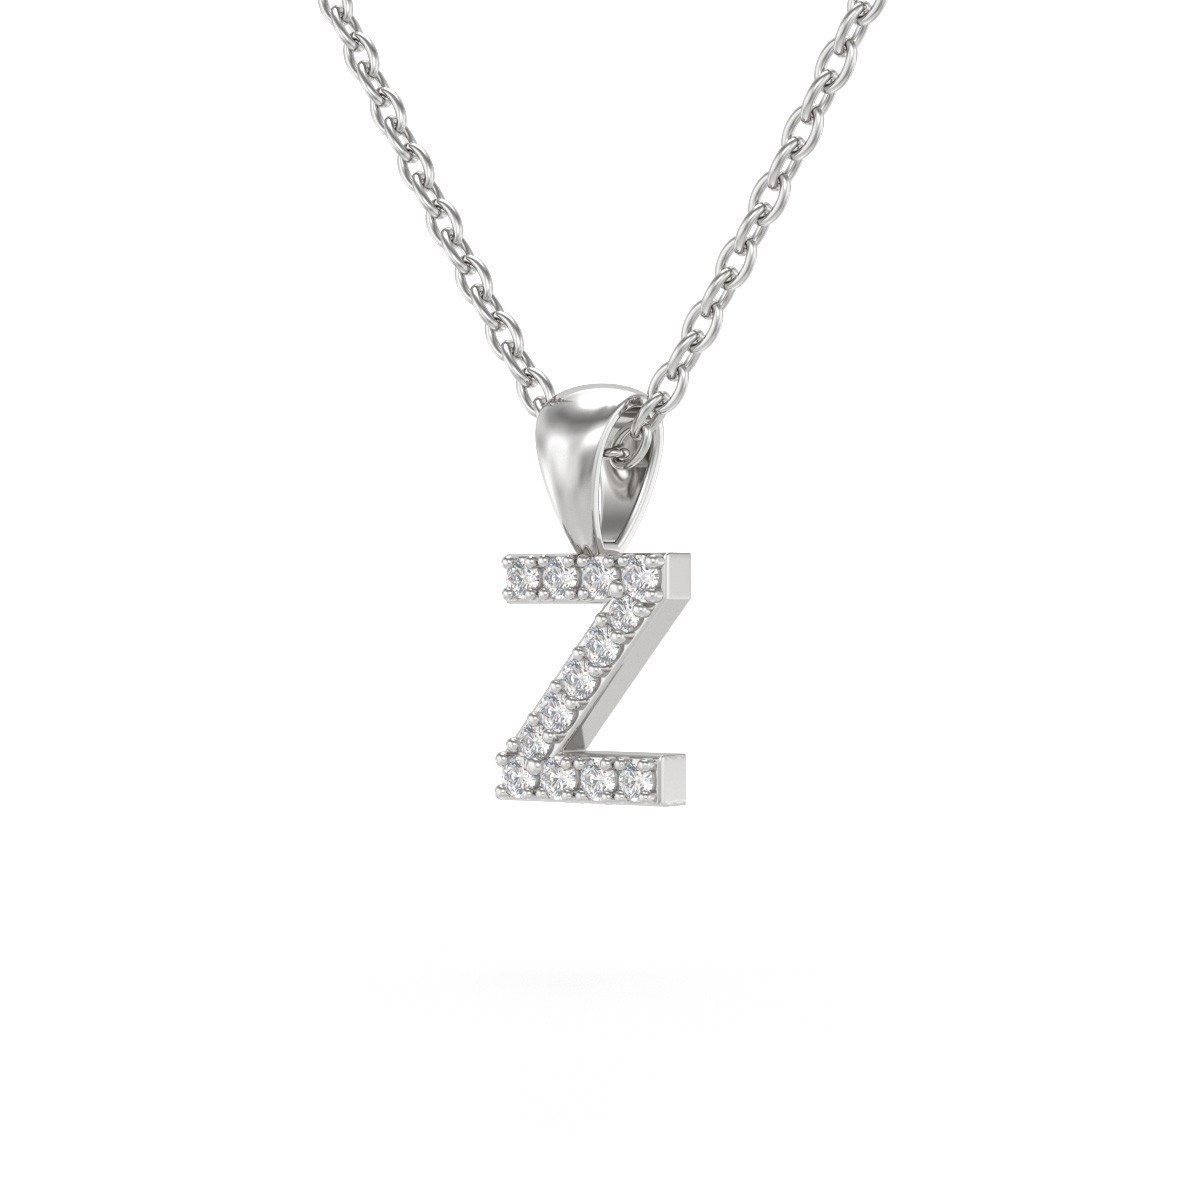 Collier Pendentif ADEN Lettre Z Or 750 Blanc Diamant Chaine Or 750 incluse 0.72grs - vue 3